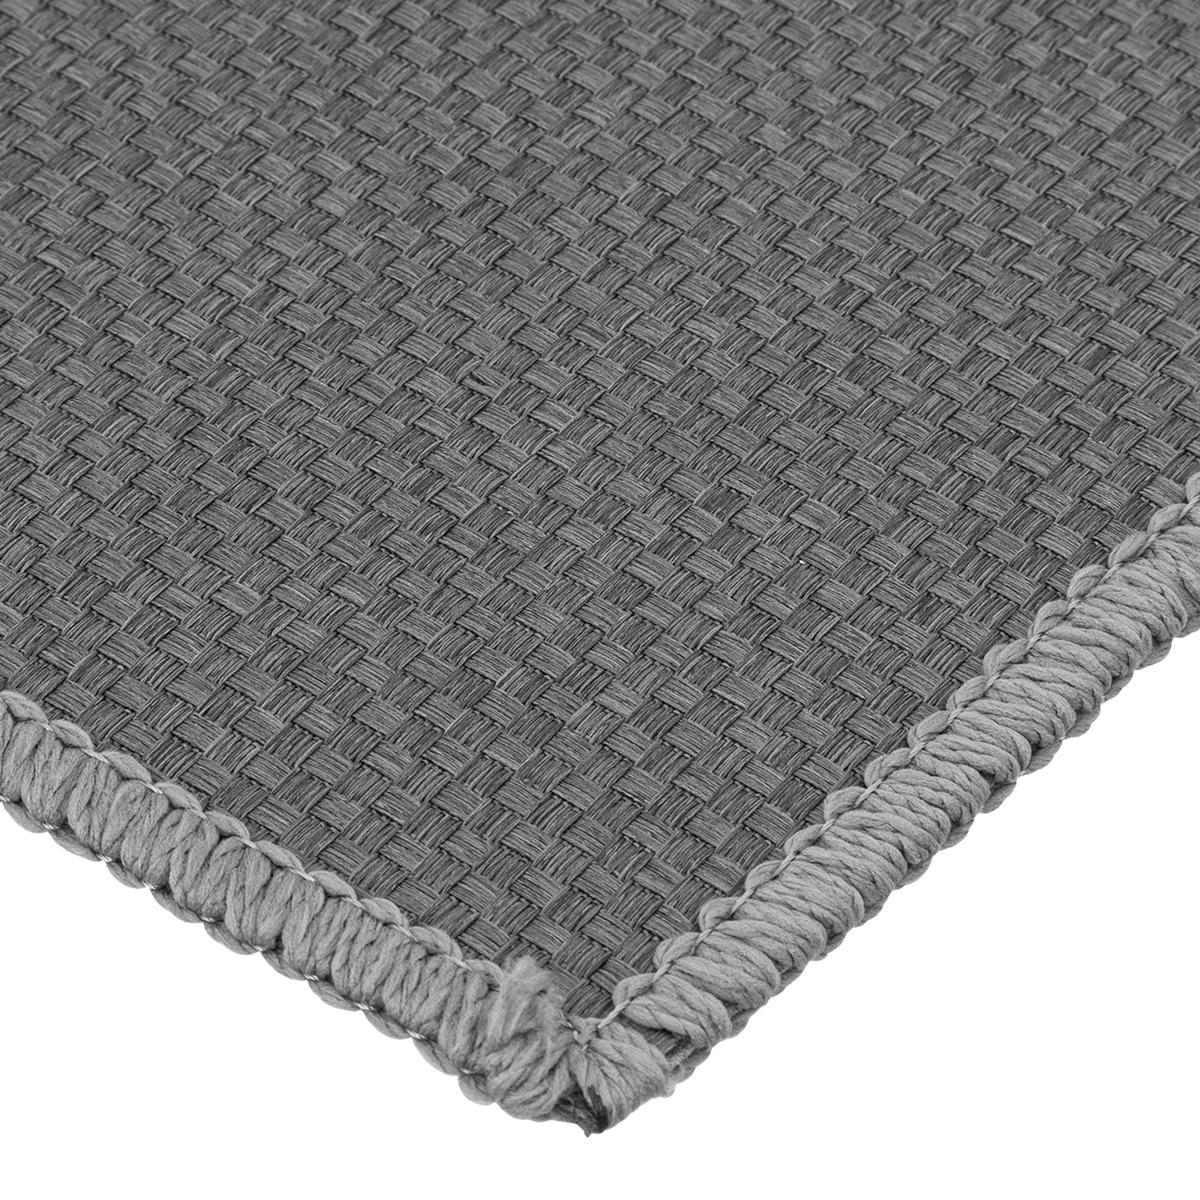 5five - tapis 45x75cm gris anthracite